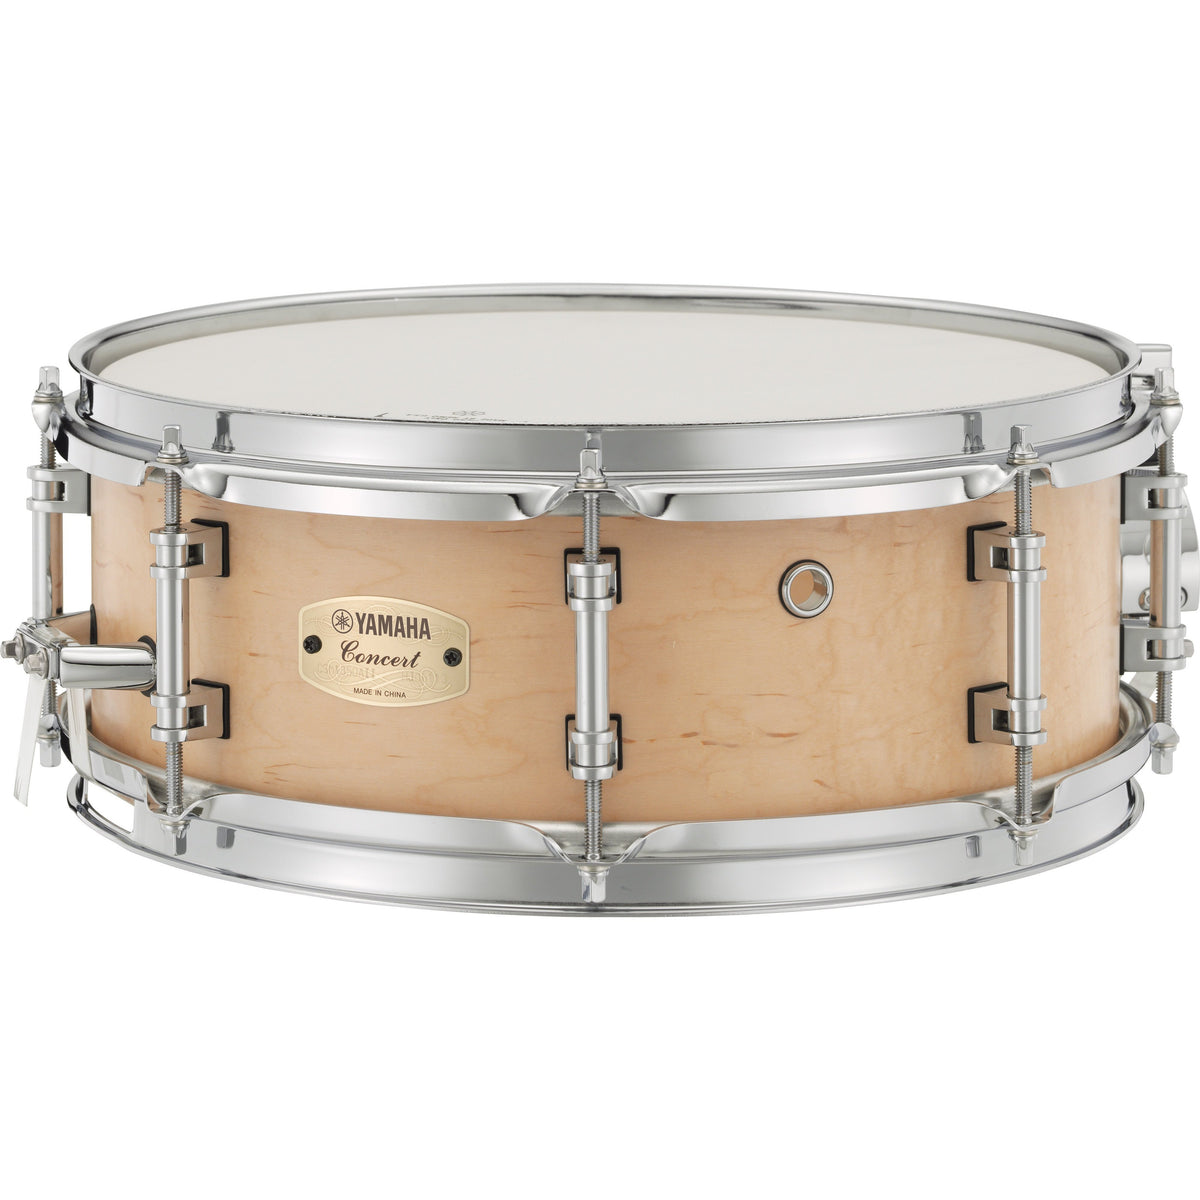 Yamaha - CSM-1350AII - Snare Drum-Percussion-Yamaha-Music Elements